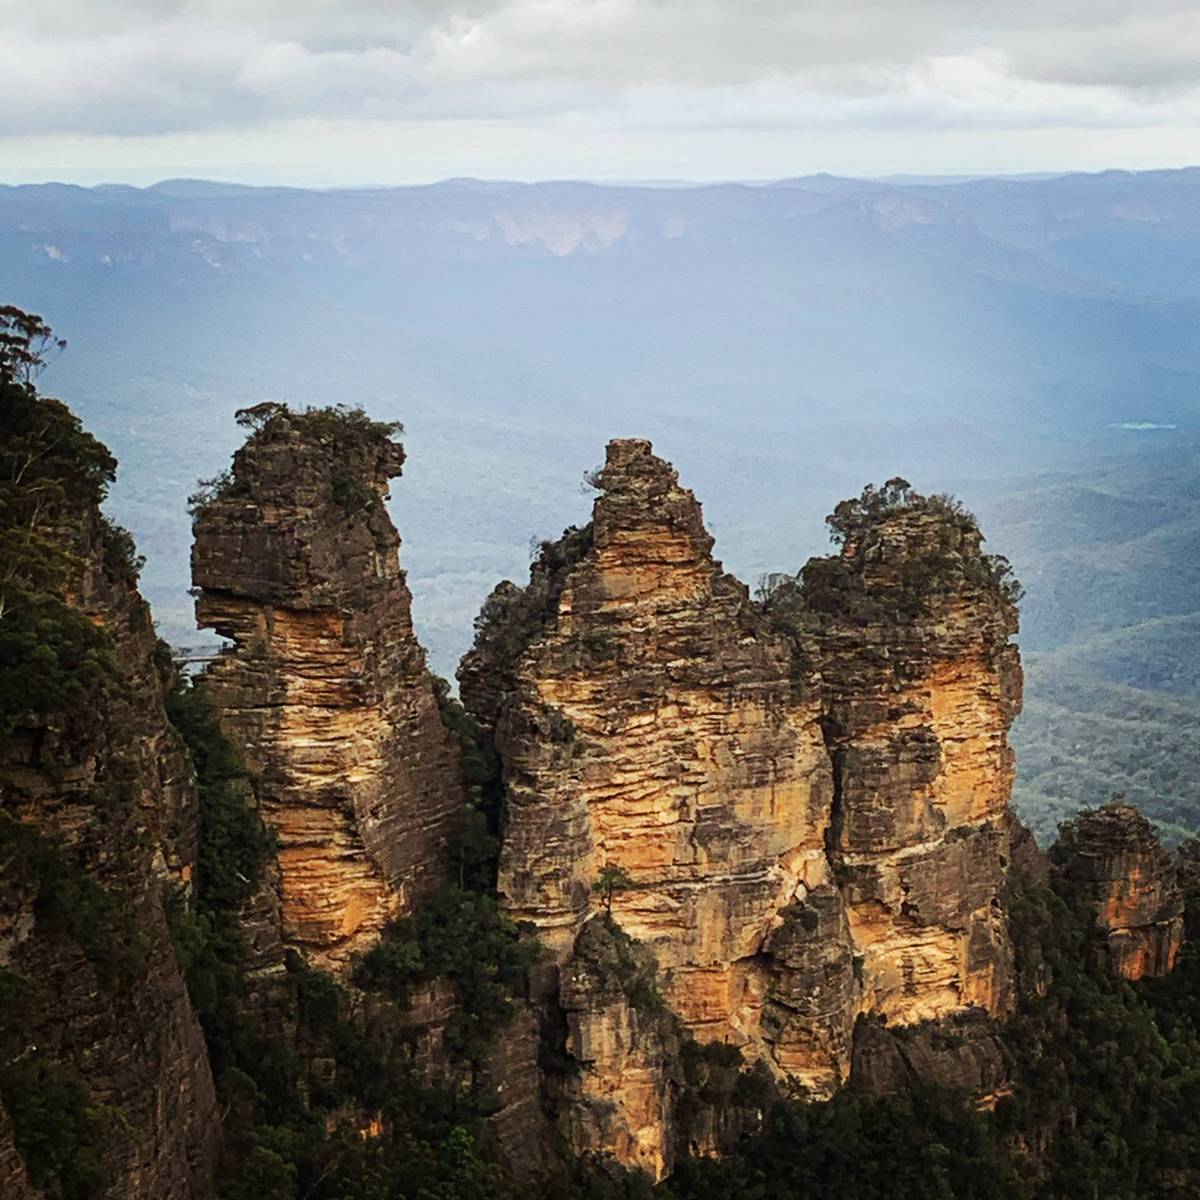 Las rocas “Tres Hermanas” / Three Sisters, Australia